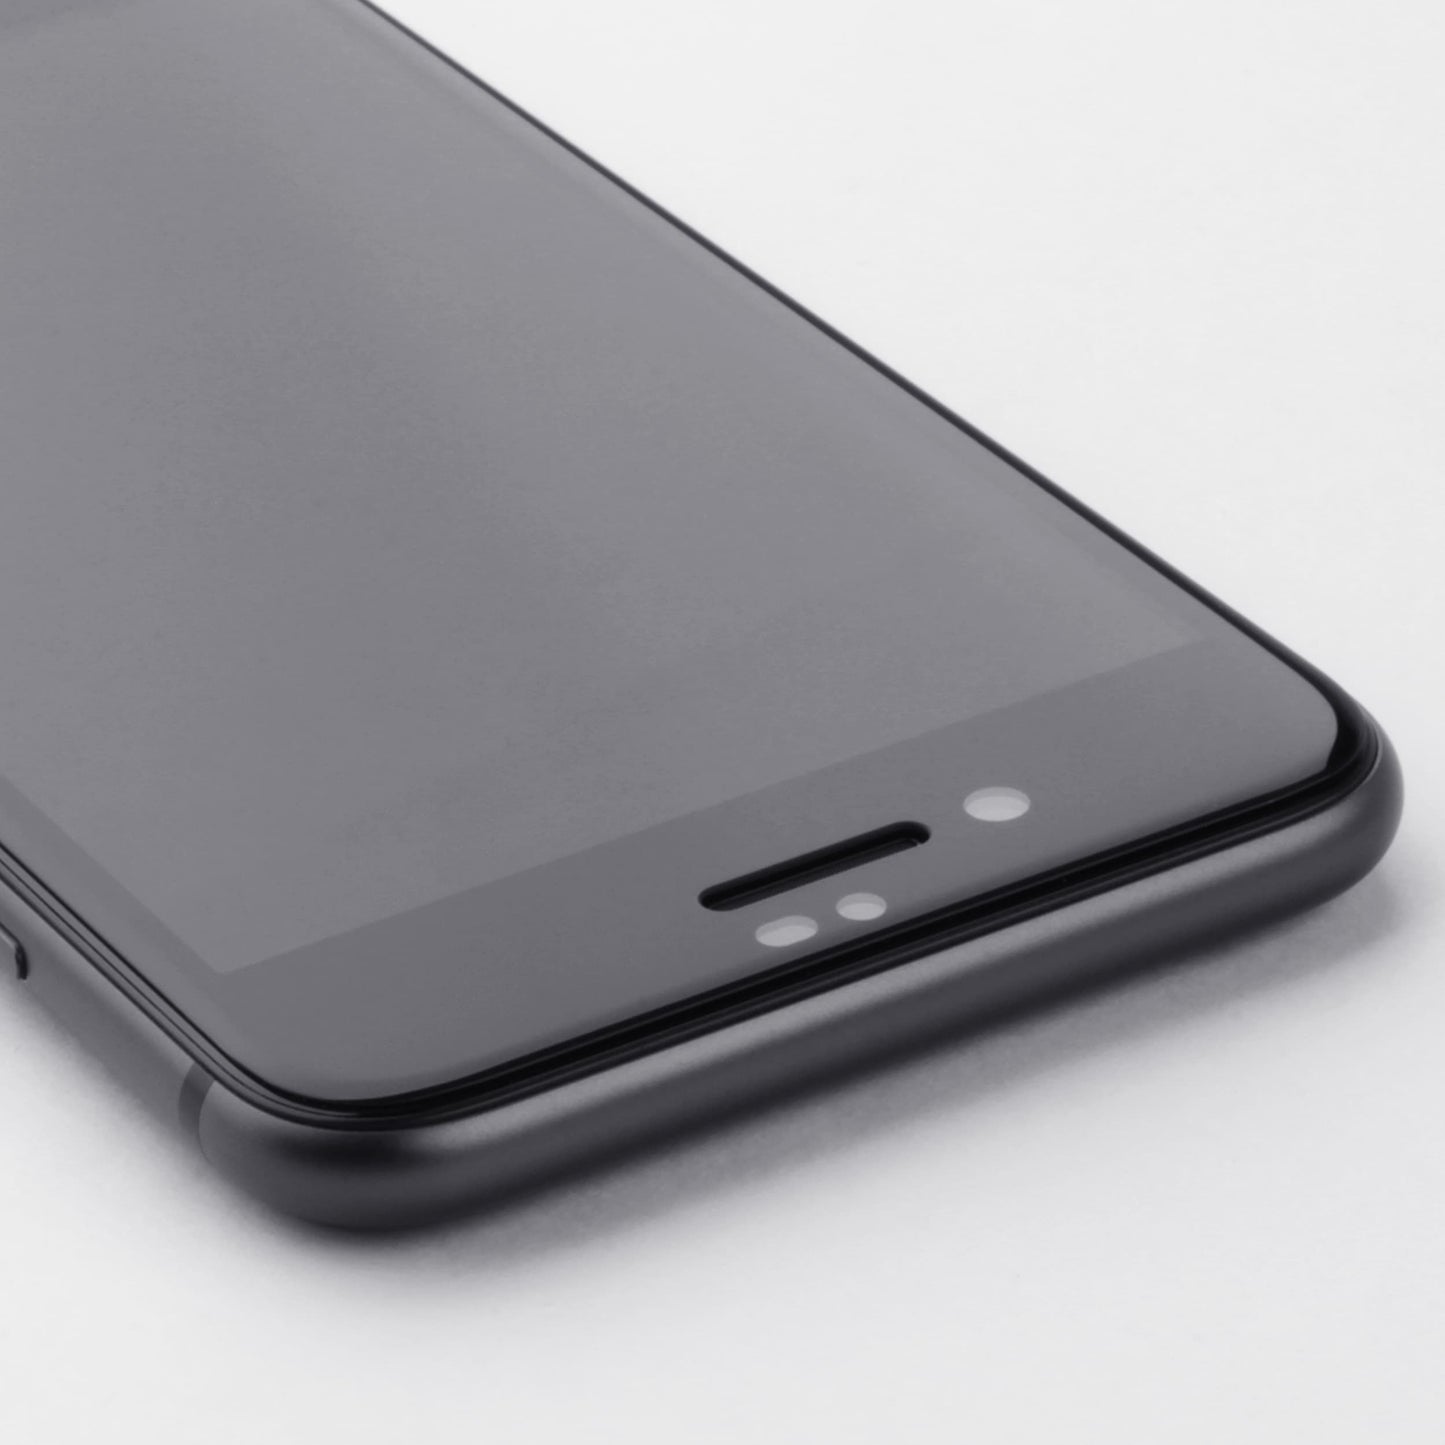 iPhone 8 - sapphire glass